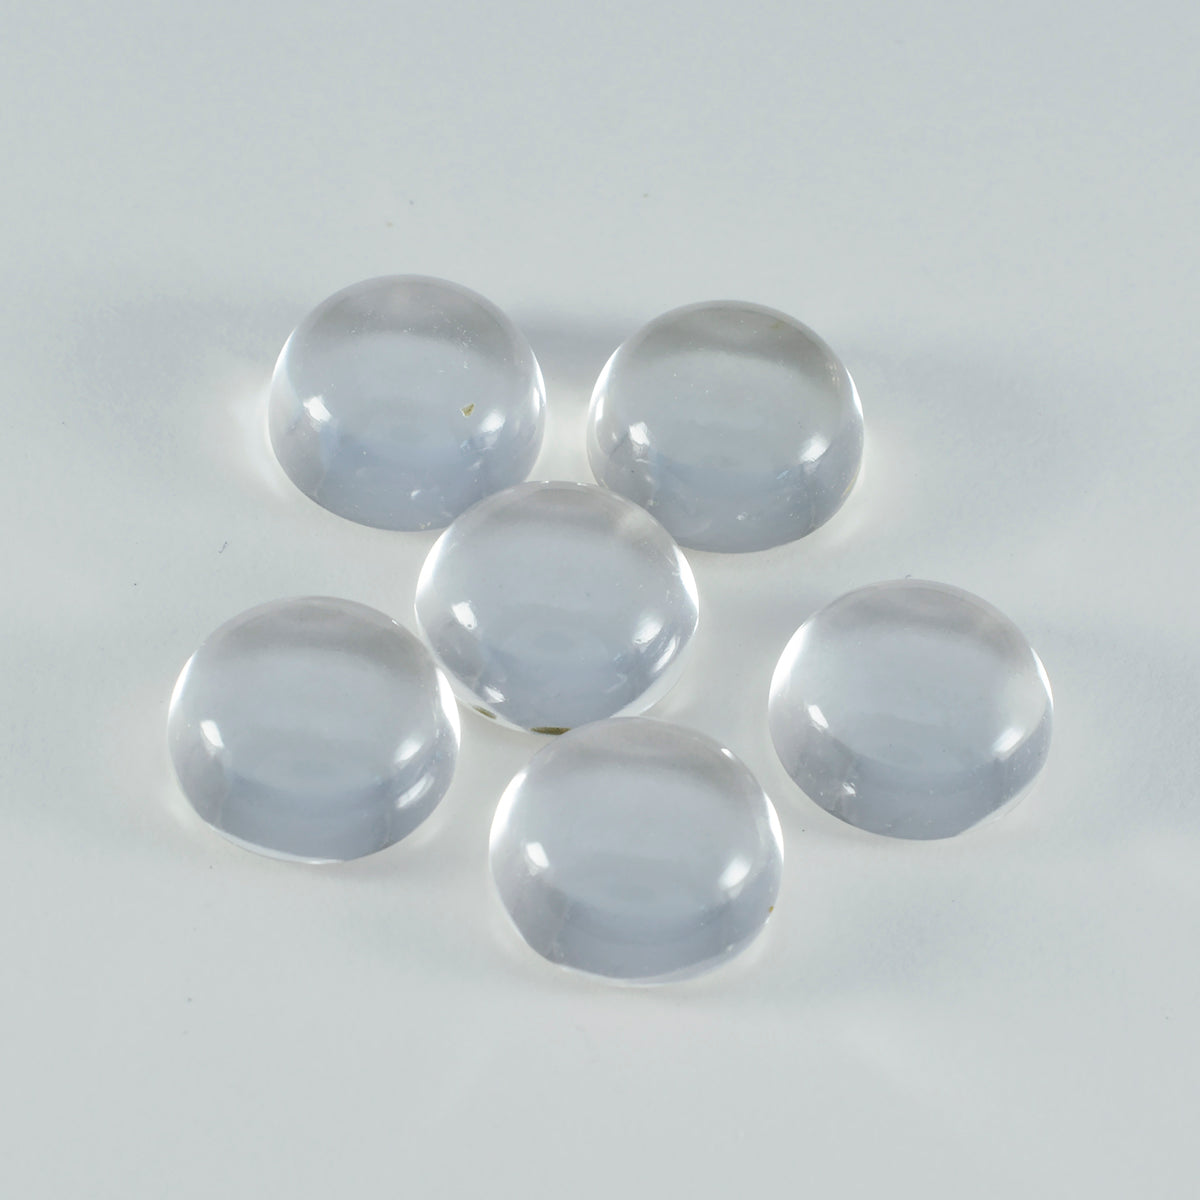 riyogems 1pc ホワイトクリスタルクォーツカボション 10x10 mm ラウンド形状素敵な品質の宝石